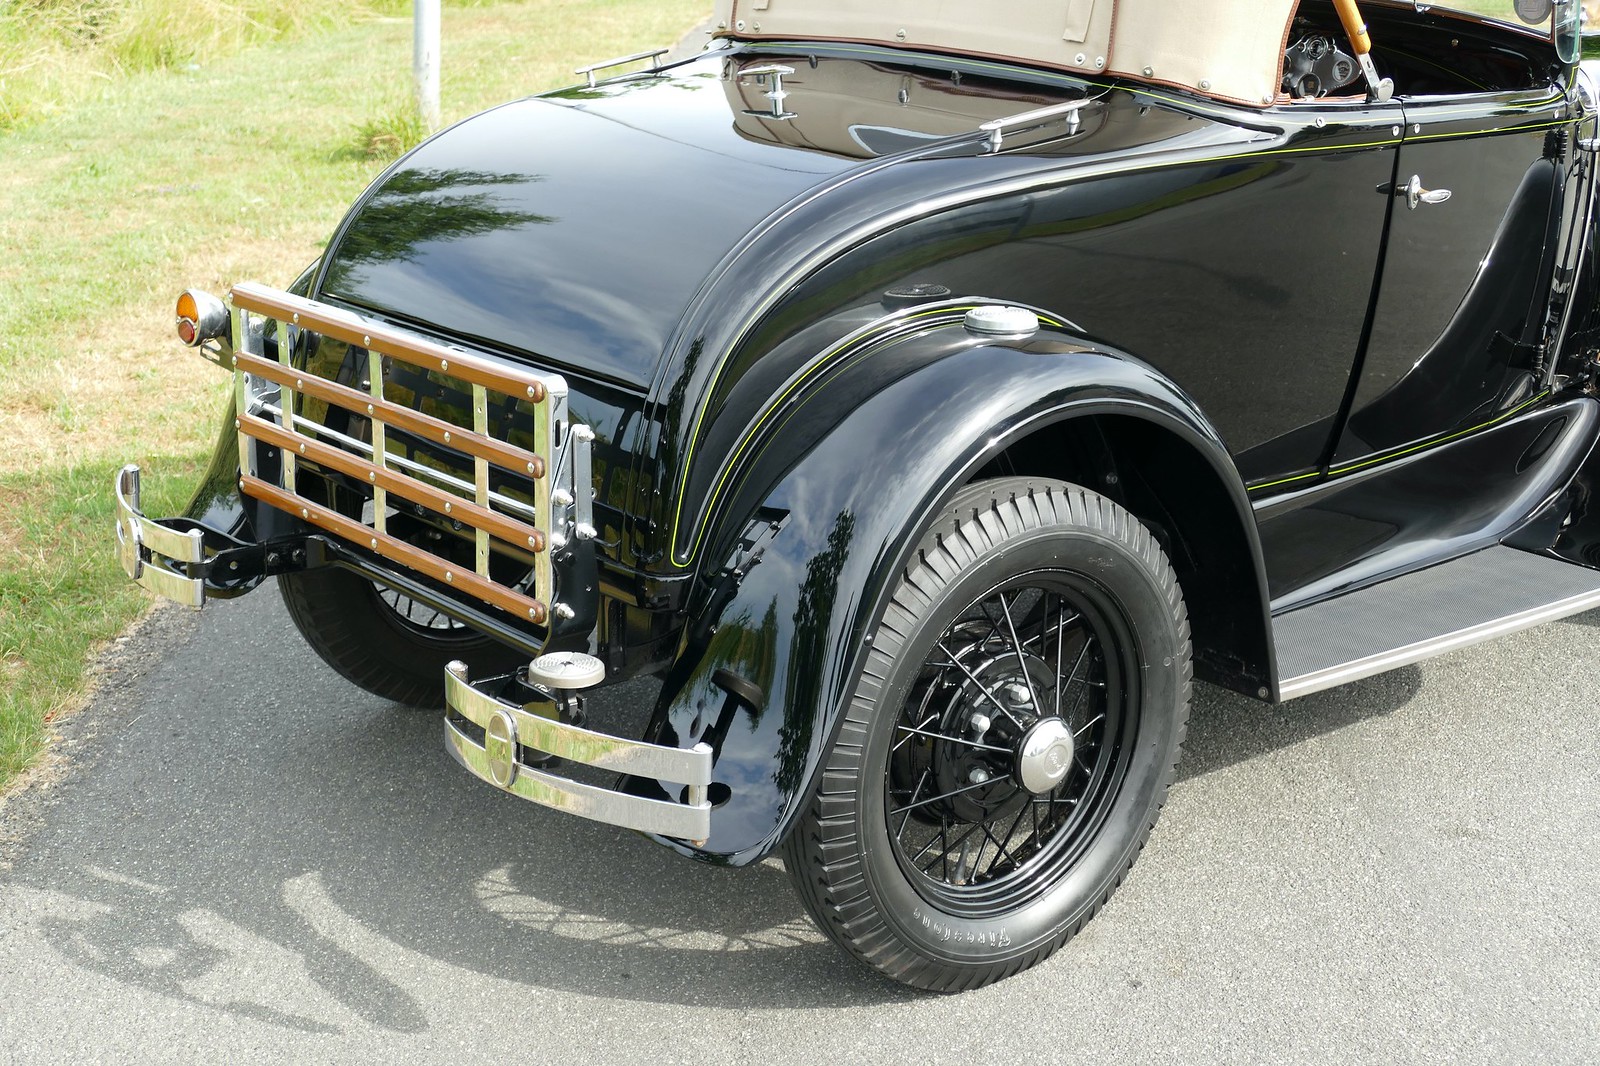 Ford Model A Roadster 1931 Black